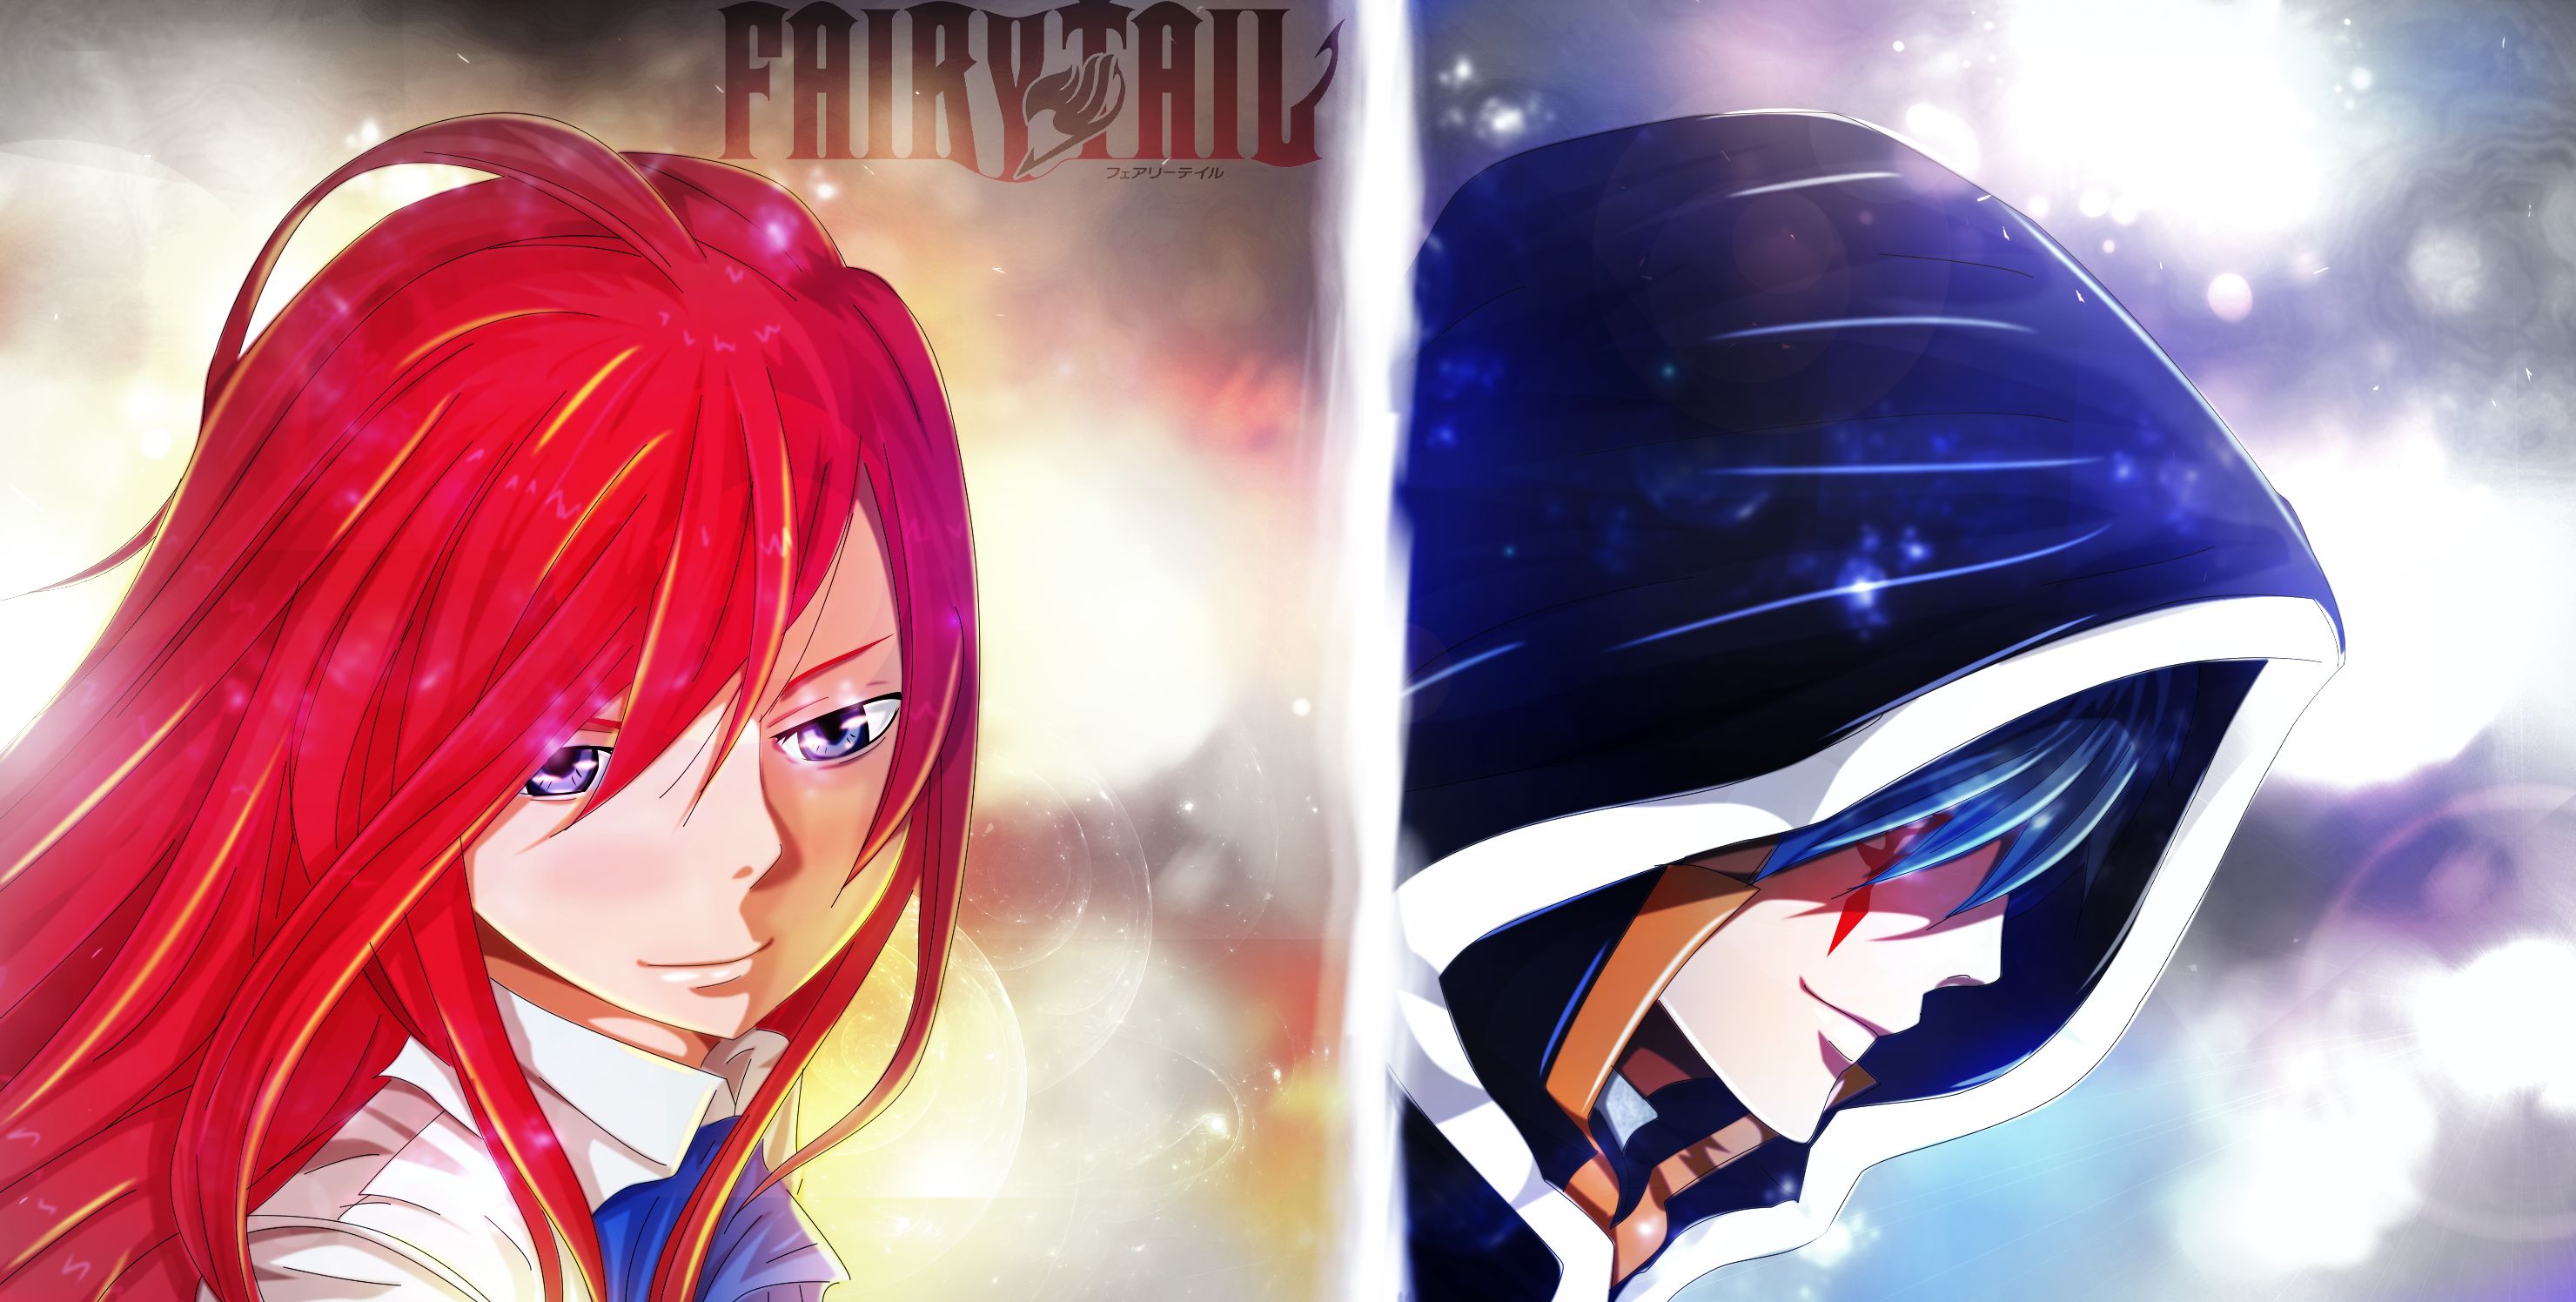 Descarga gratuita de fondo de pantalla para móvil de Fairy Tail, Animado, Erza Scarlet, Jellal Fernandes.